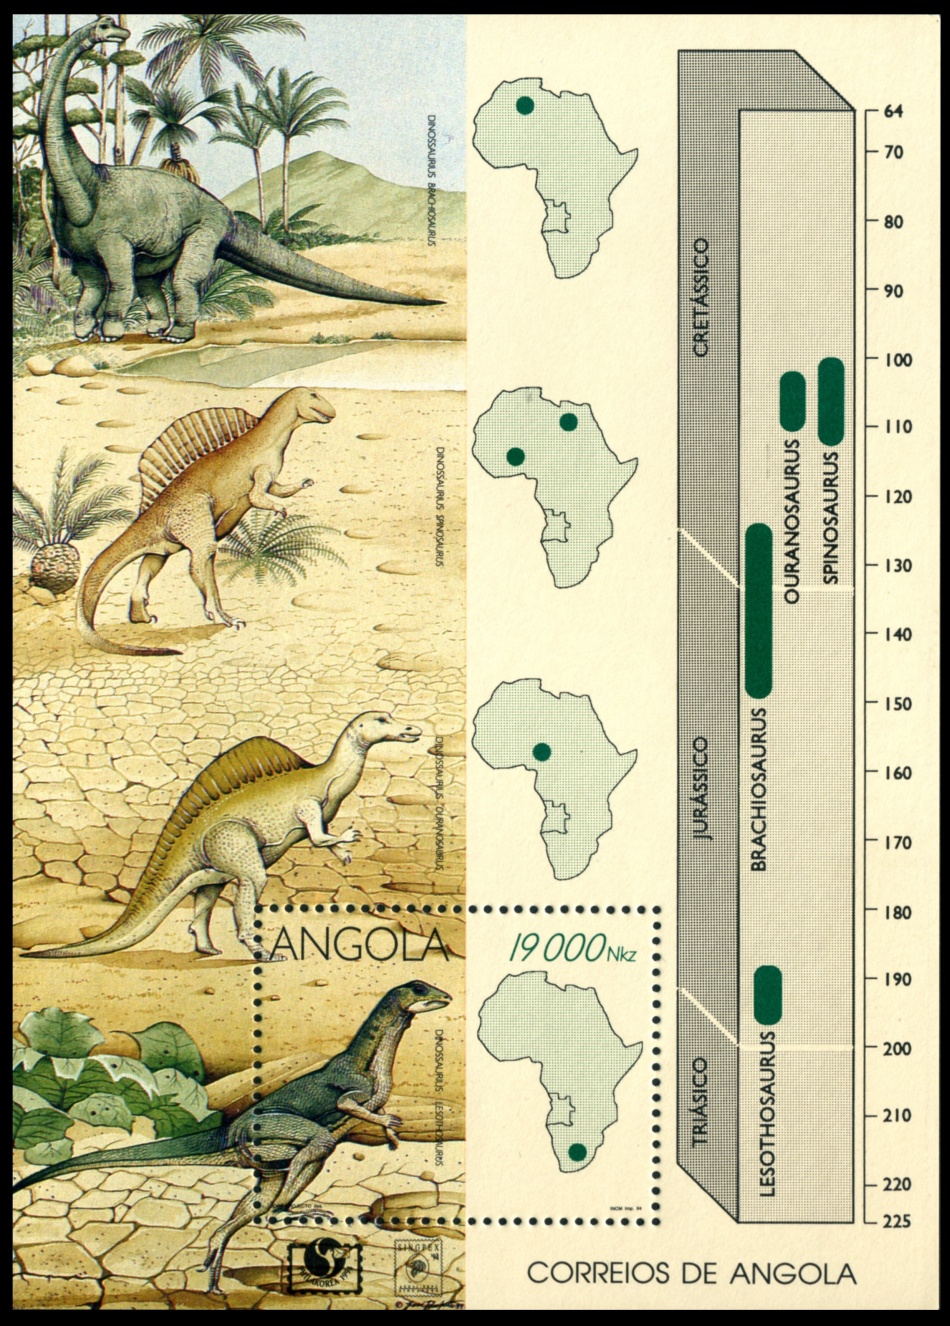 Dinosaurs of Angola